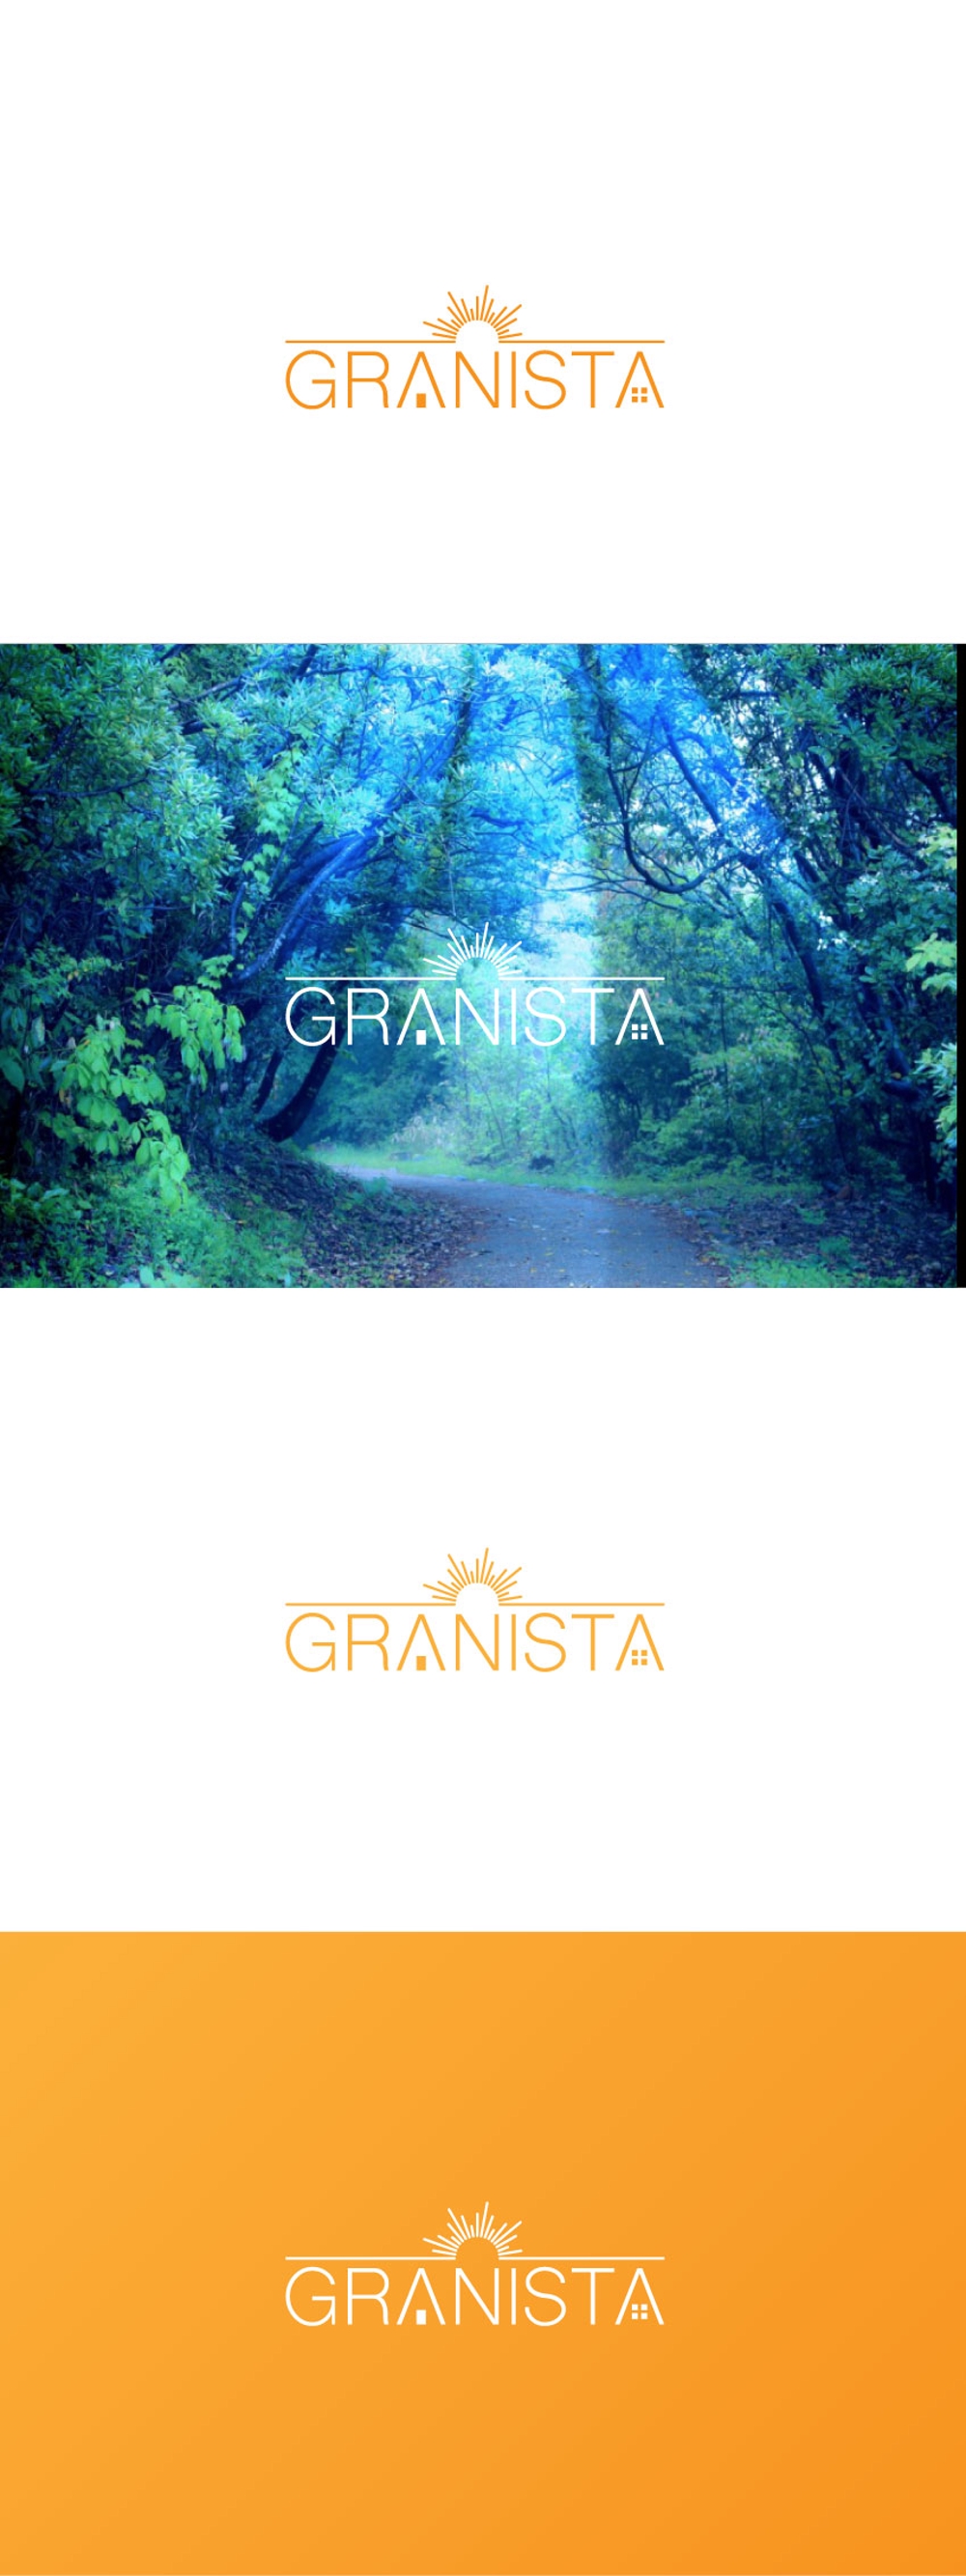 GRANISTA-02.jpg